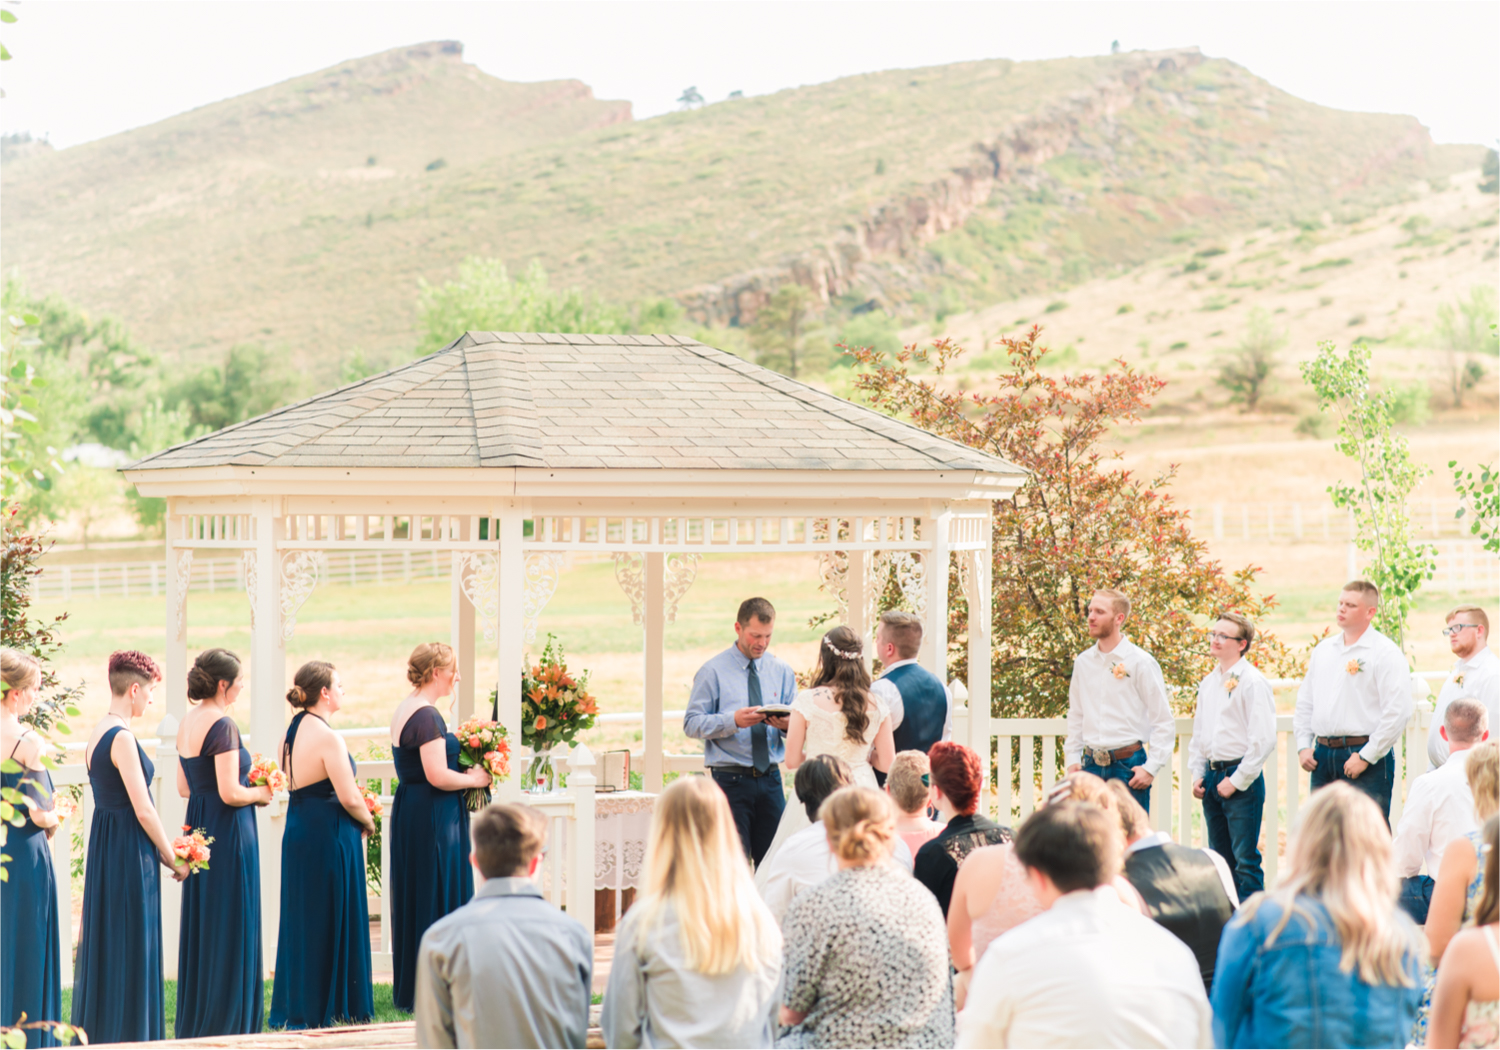 Summer Ellis Ranch Wedding in Loveland Colorado | Britni Girard Photography | Wedding Photo and Video Team | Gazebo Ceremony on Rustic Colorado Ranch